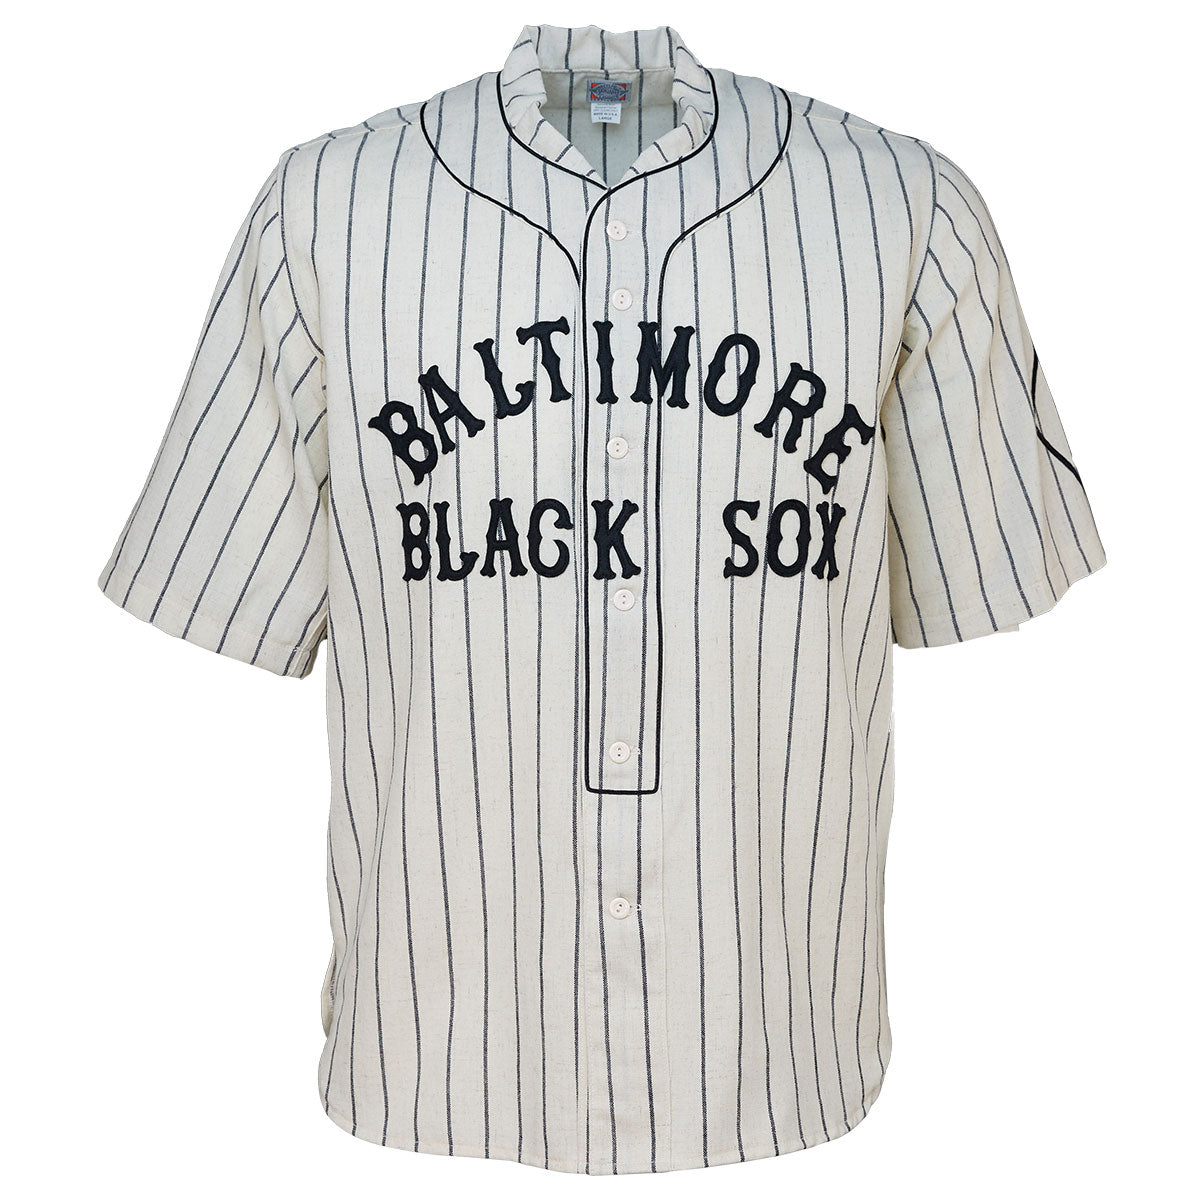 1919 black sox jersey